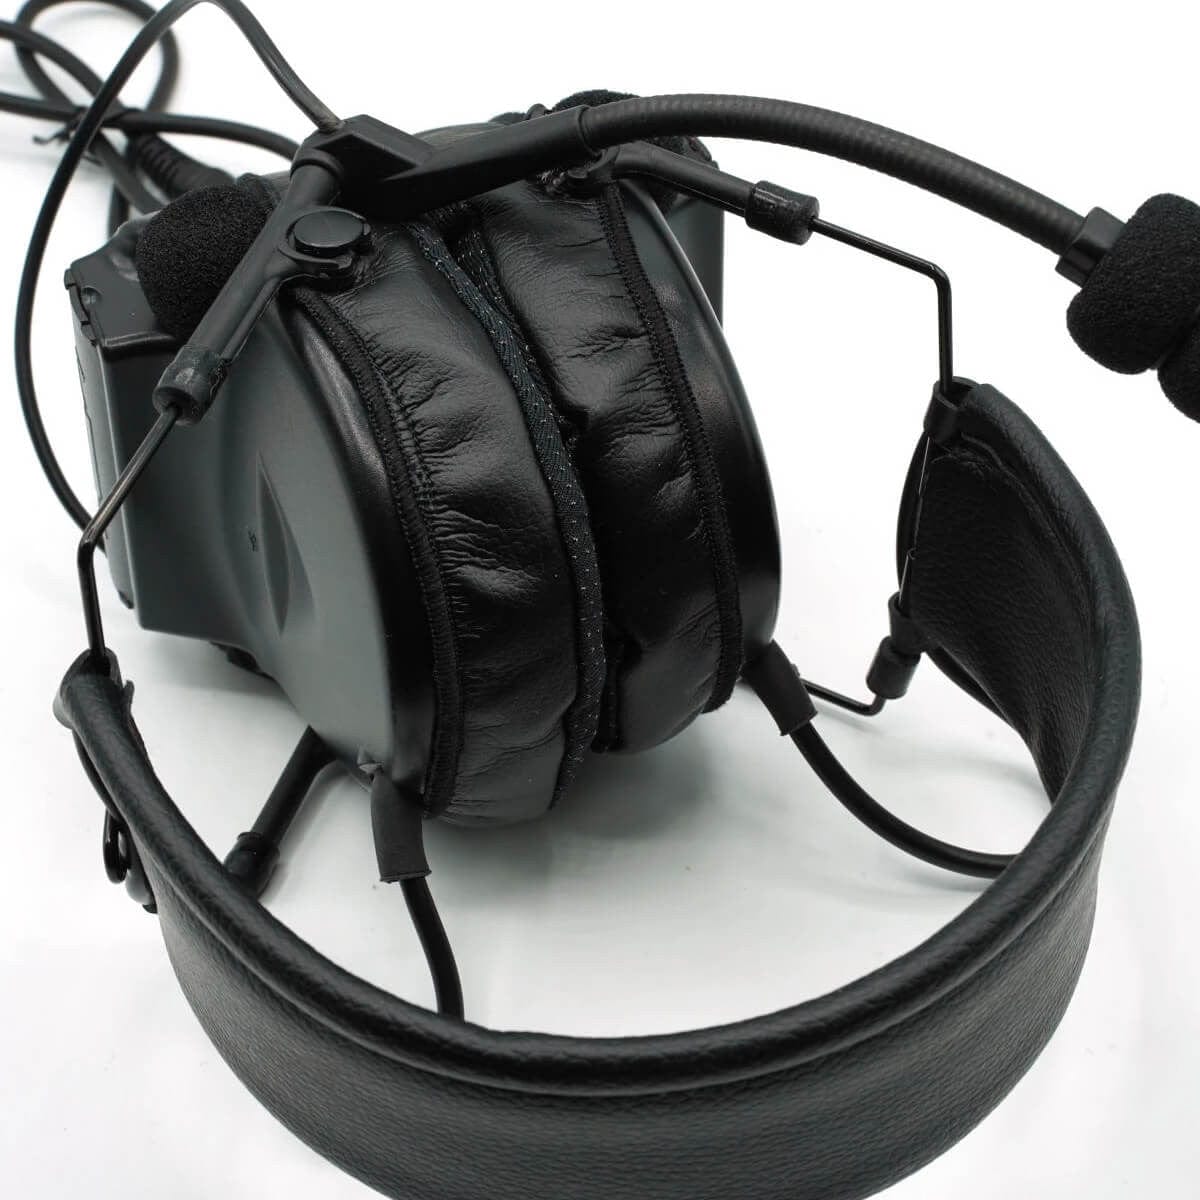 Noisefighters Heatsync Sweat-Wicking Ear Pad Covers - On Headset Sample